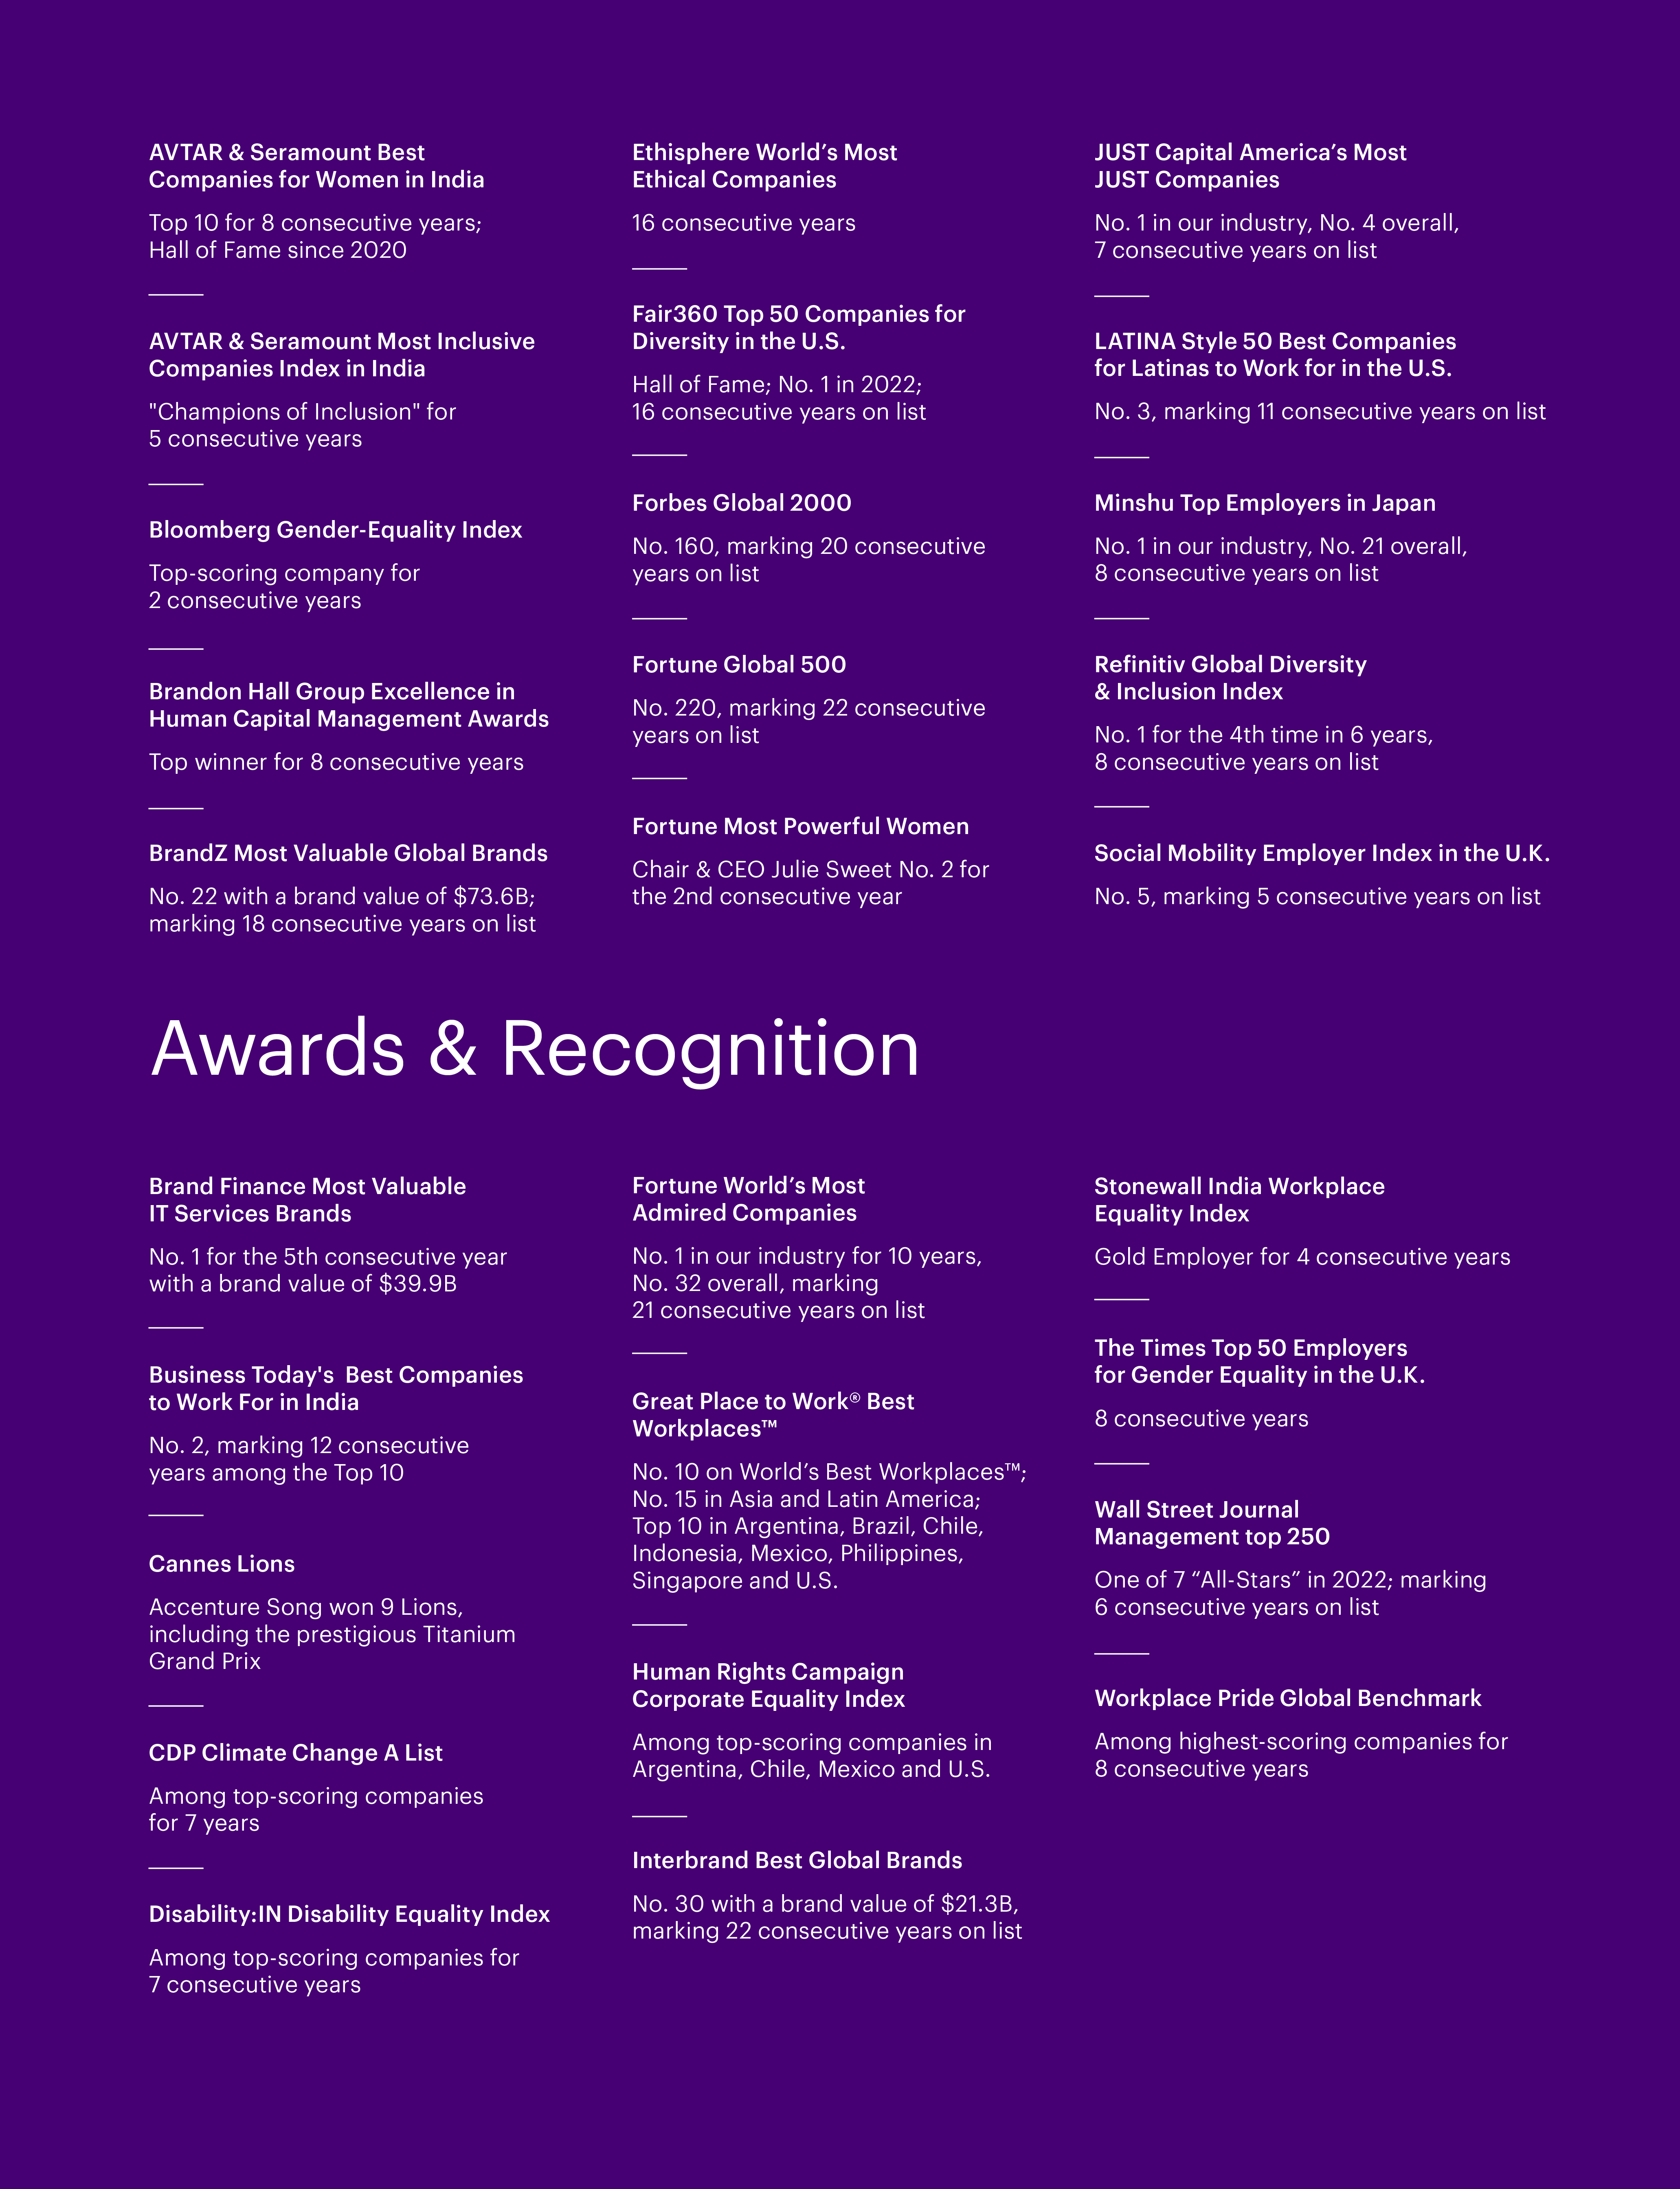 gfx_awardsrecognition.jpg